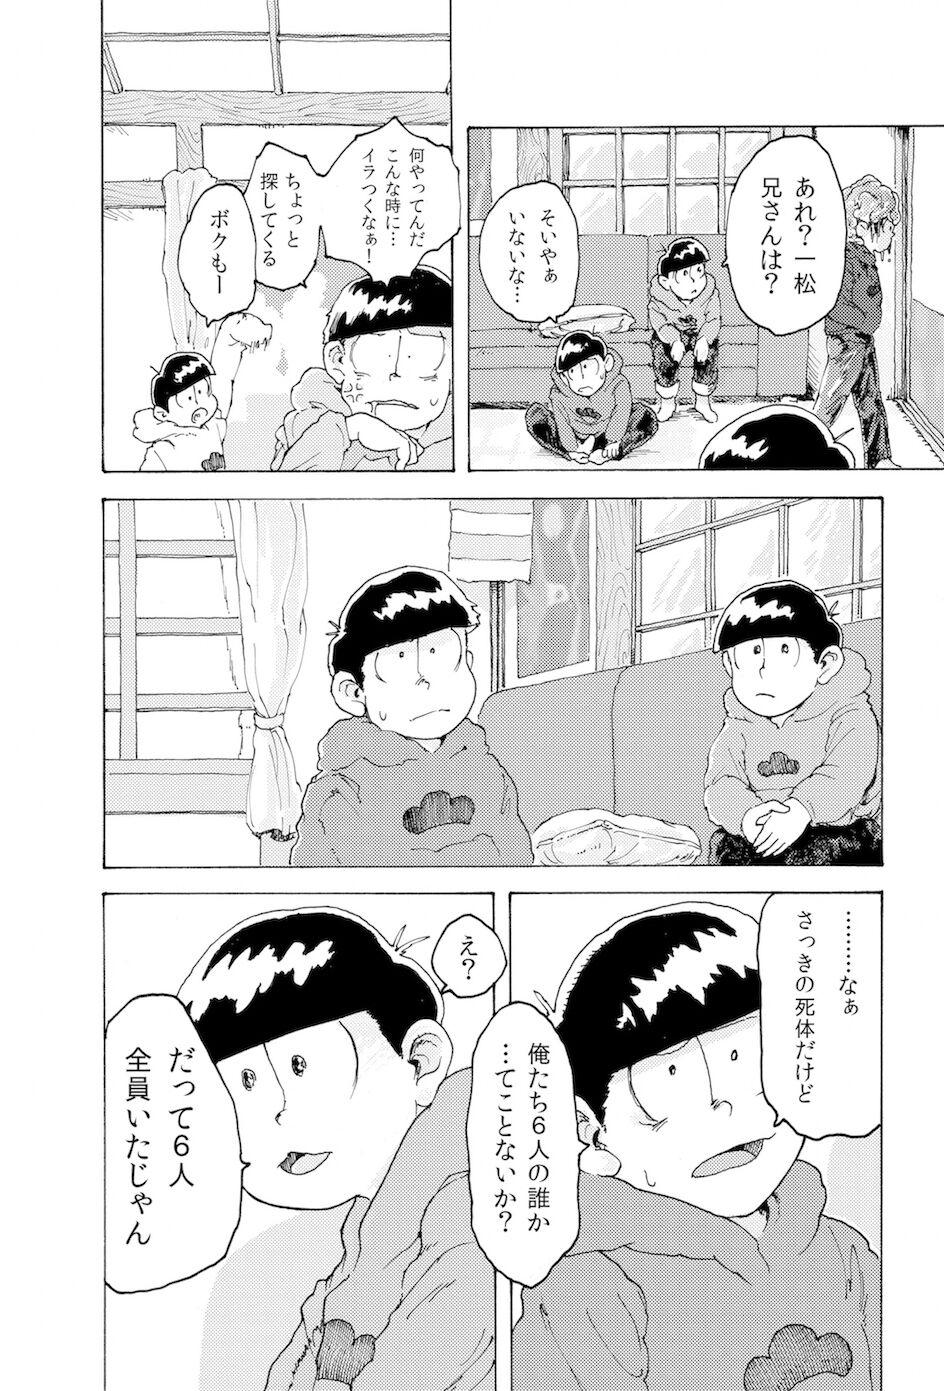 Jap [Koshigerunasunibusu] WEB Sairoku [R18G] 'AIN'T SIX IS DEATH' - Osomatsu san Love Making - Page 11